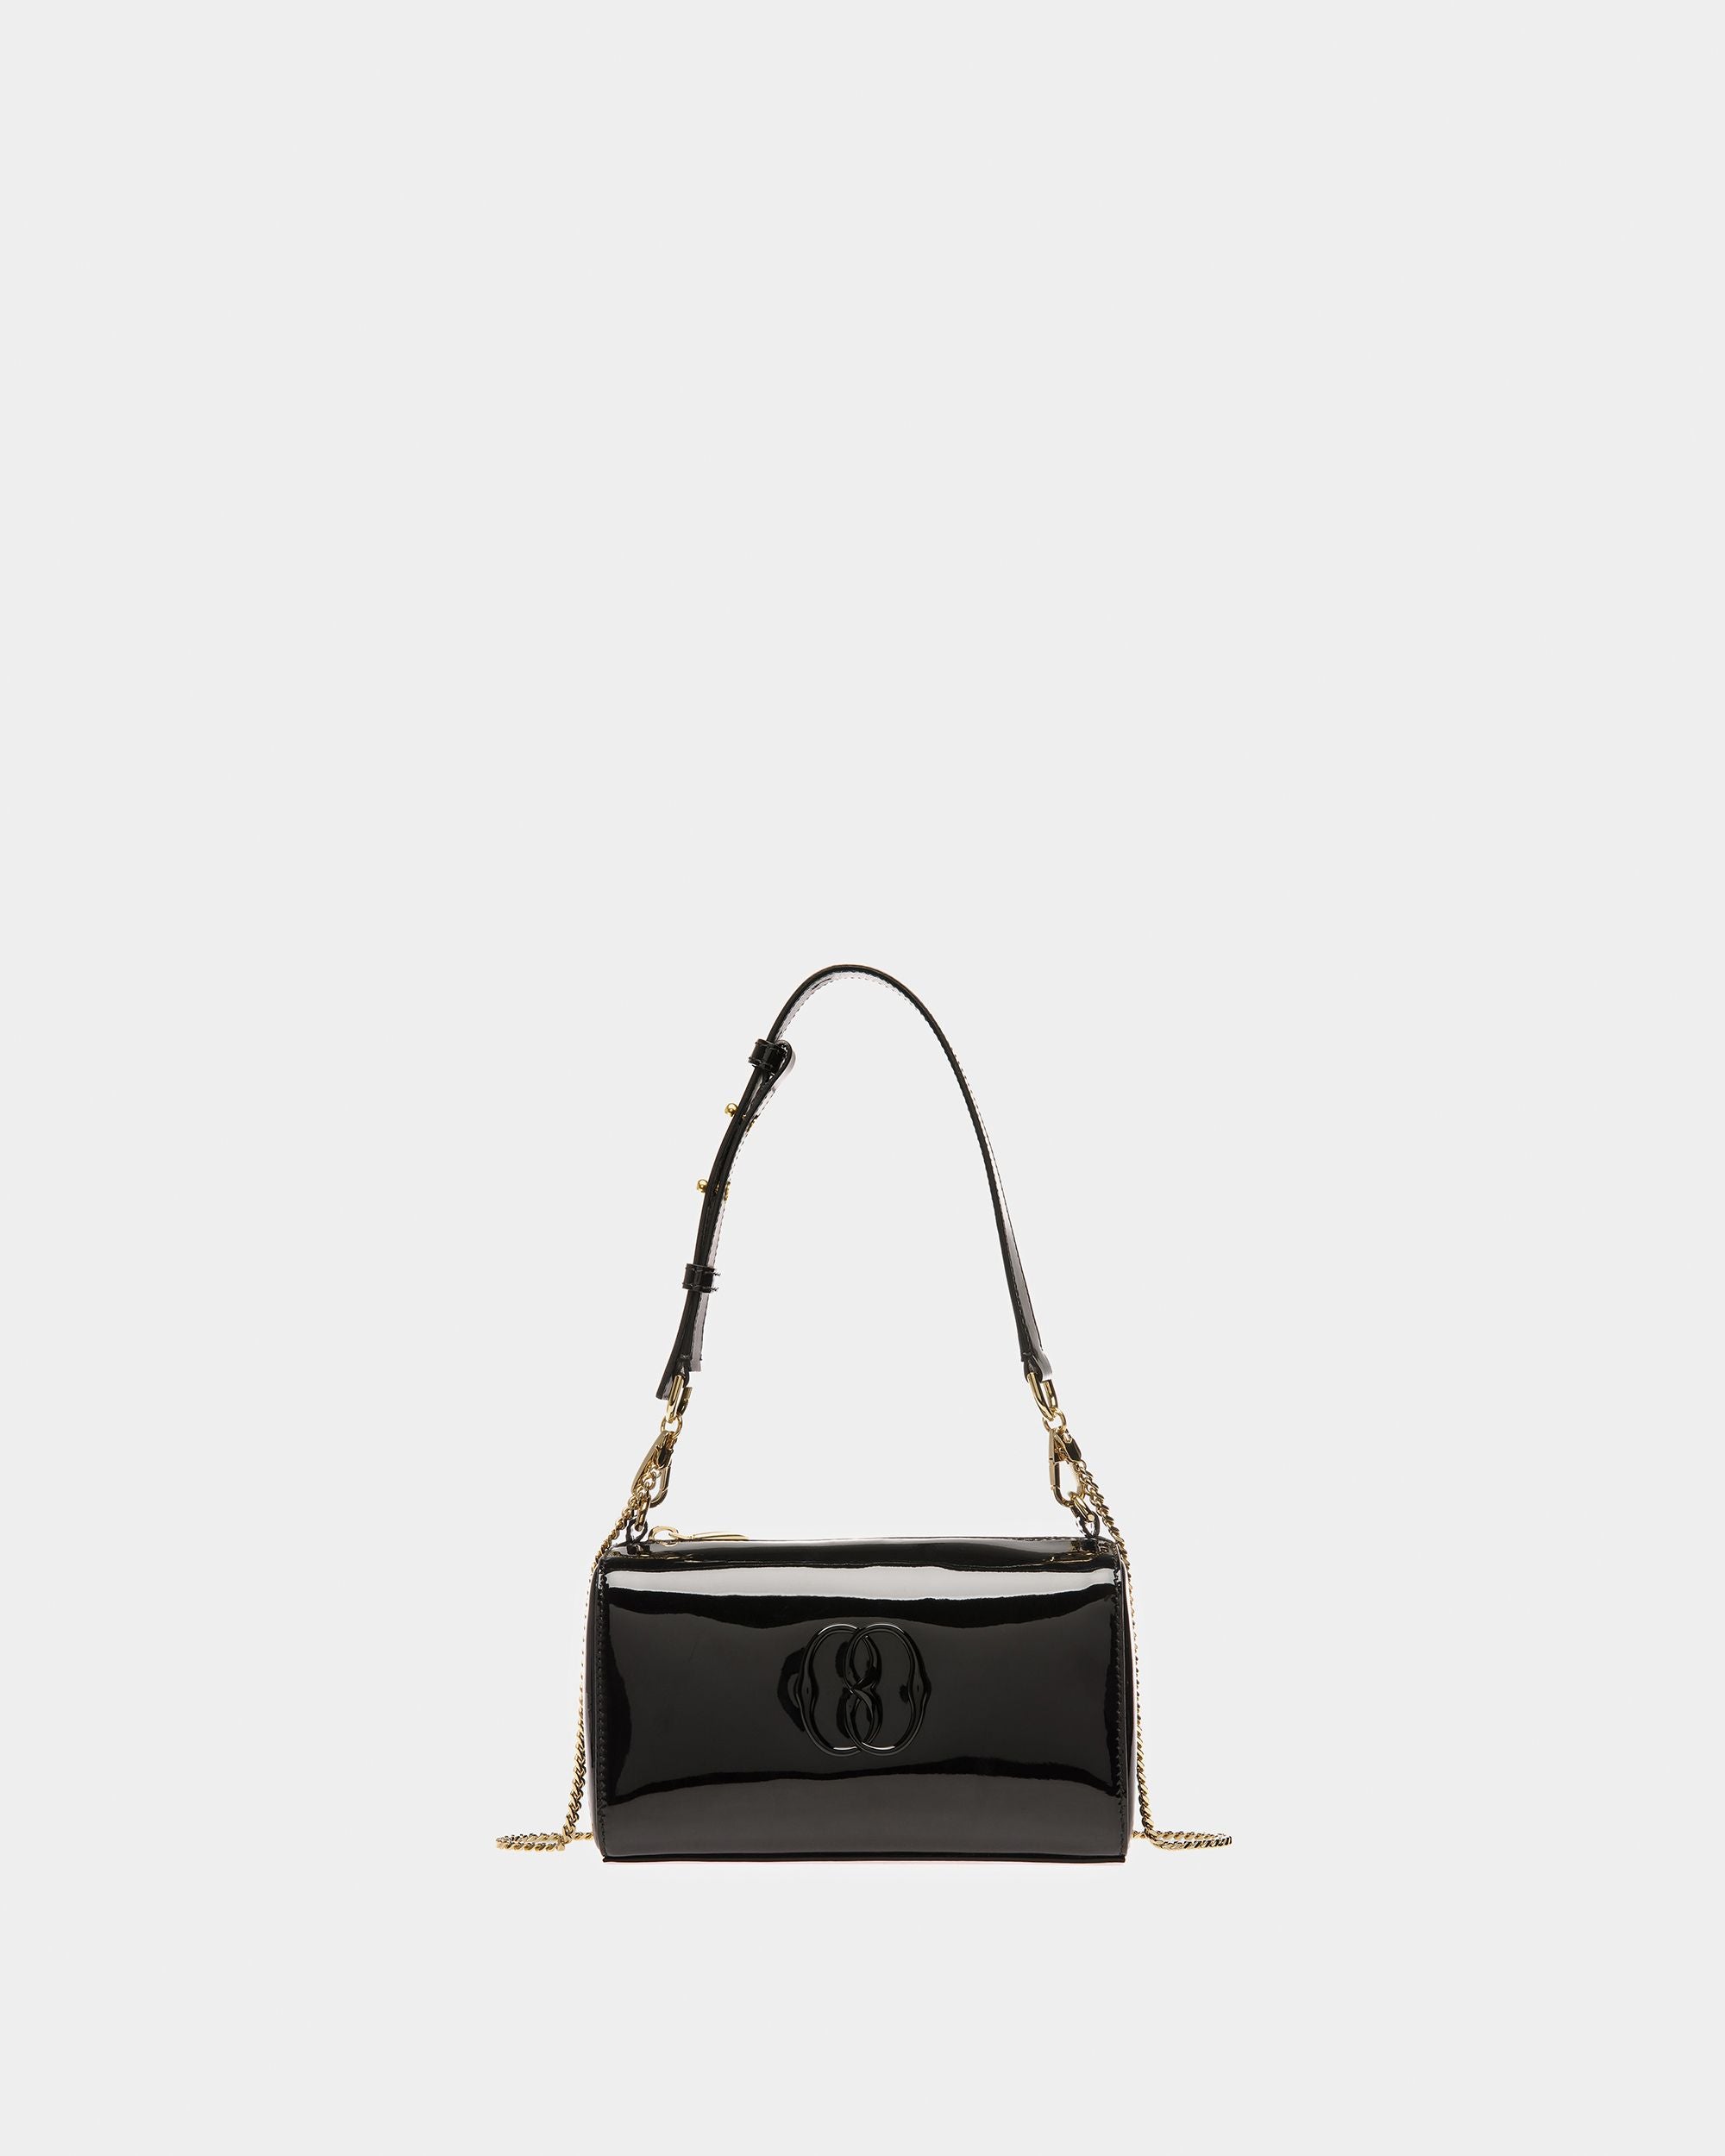 Emblem Rox Minibag | Women's Minibag | Black Leather | Bally | Still Life Front